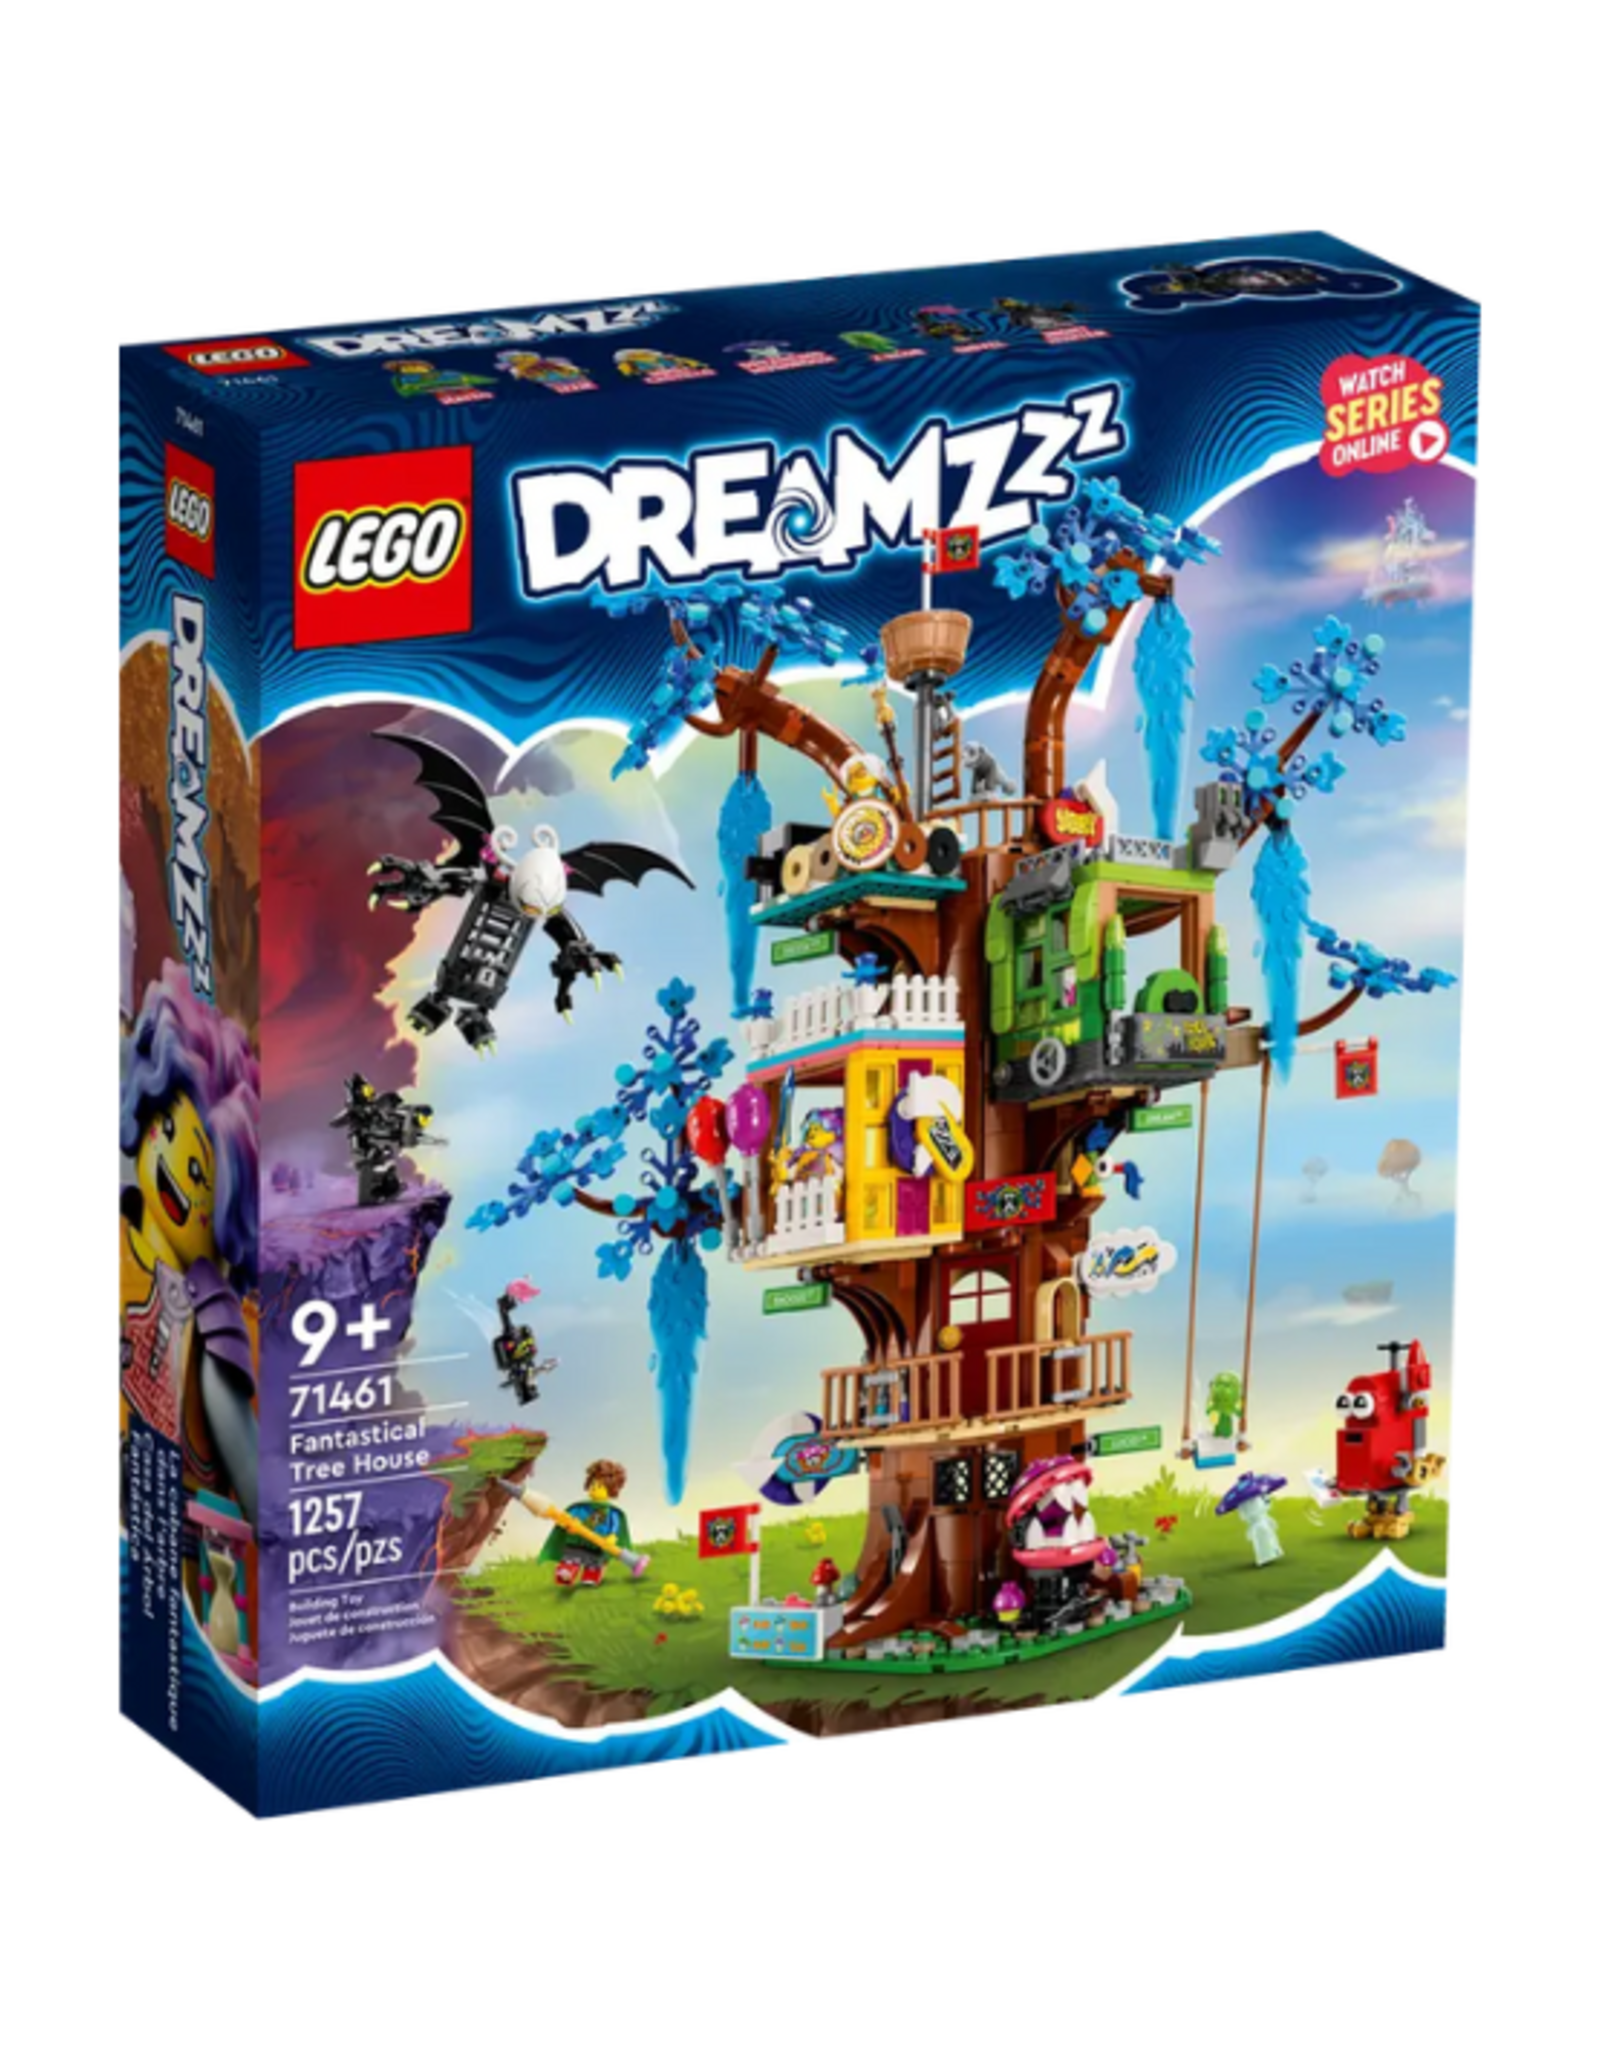 Lego Lego - Dreamzzz - 71461 - Fantastical Tree House